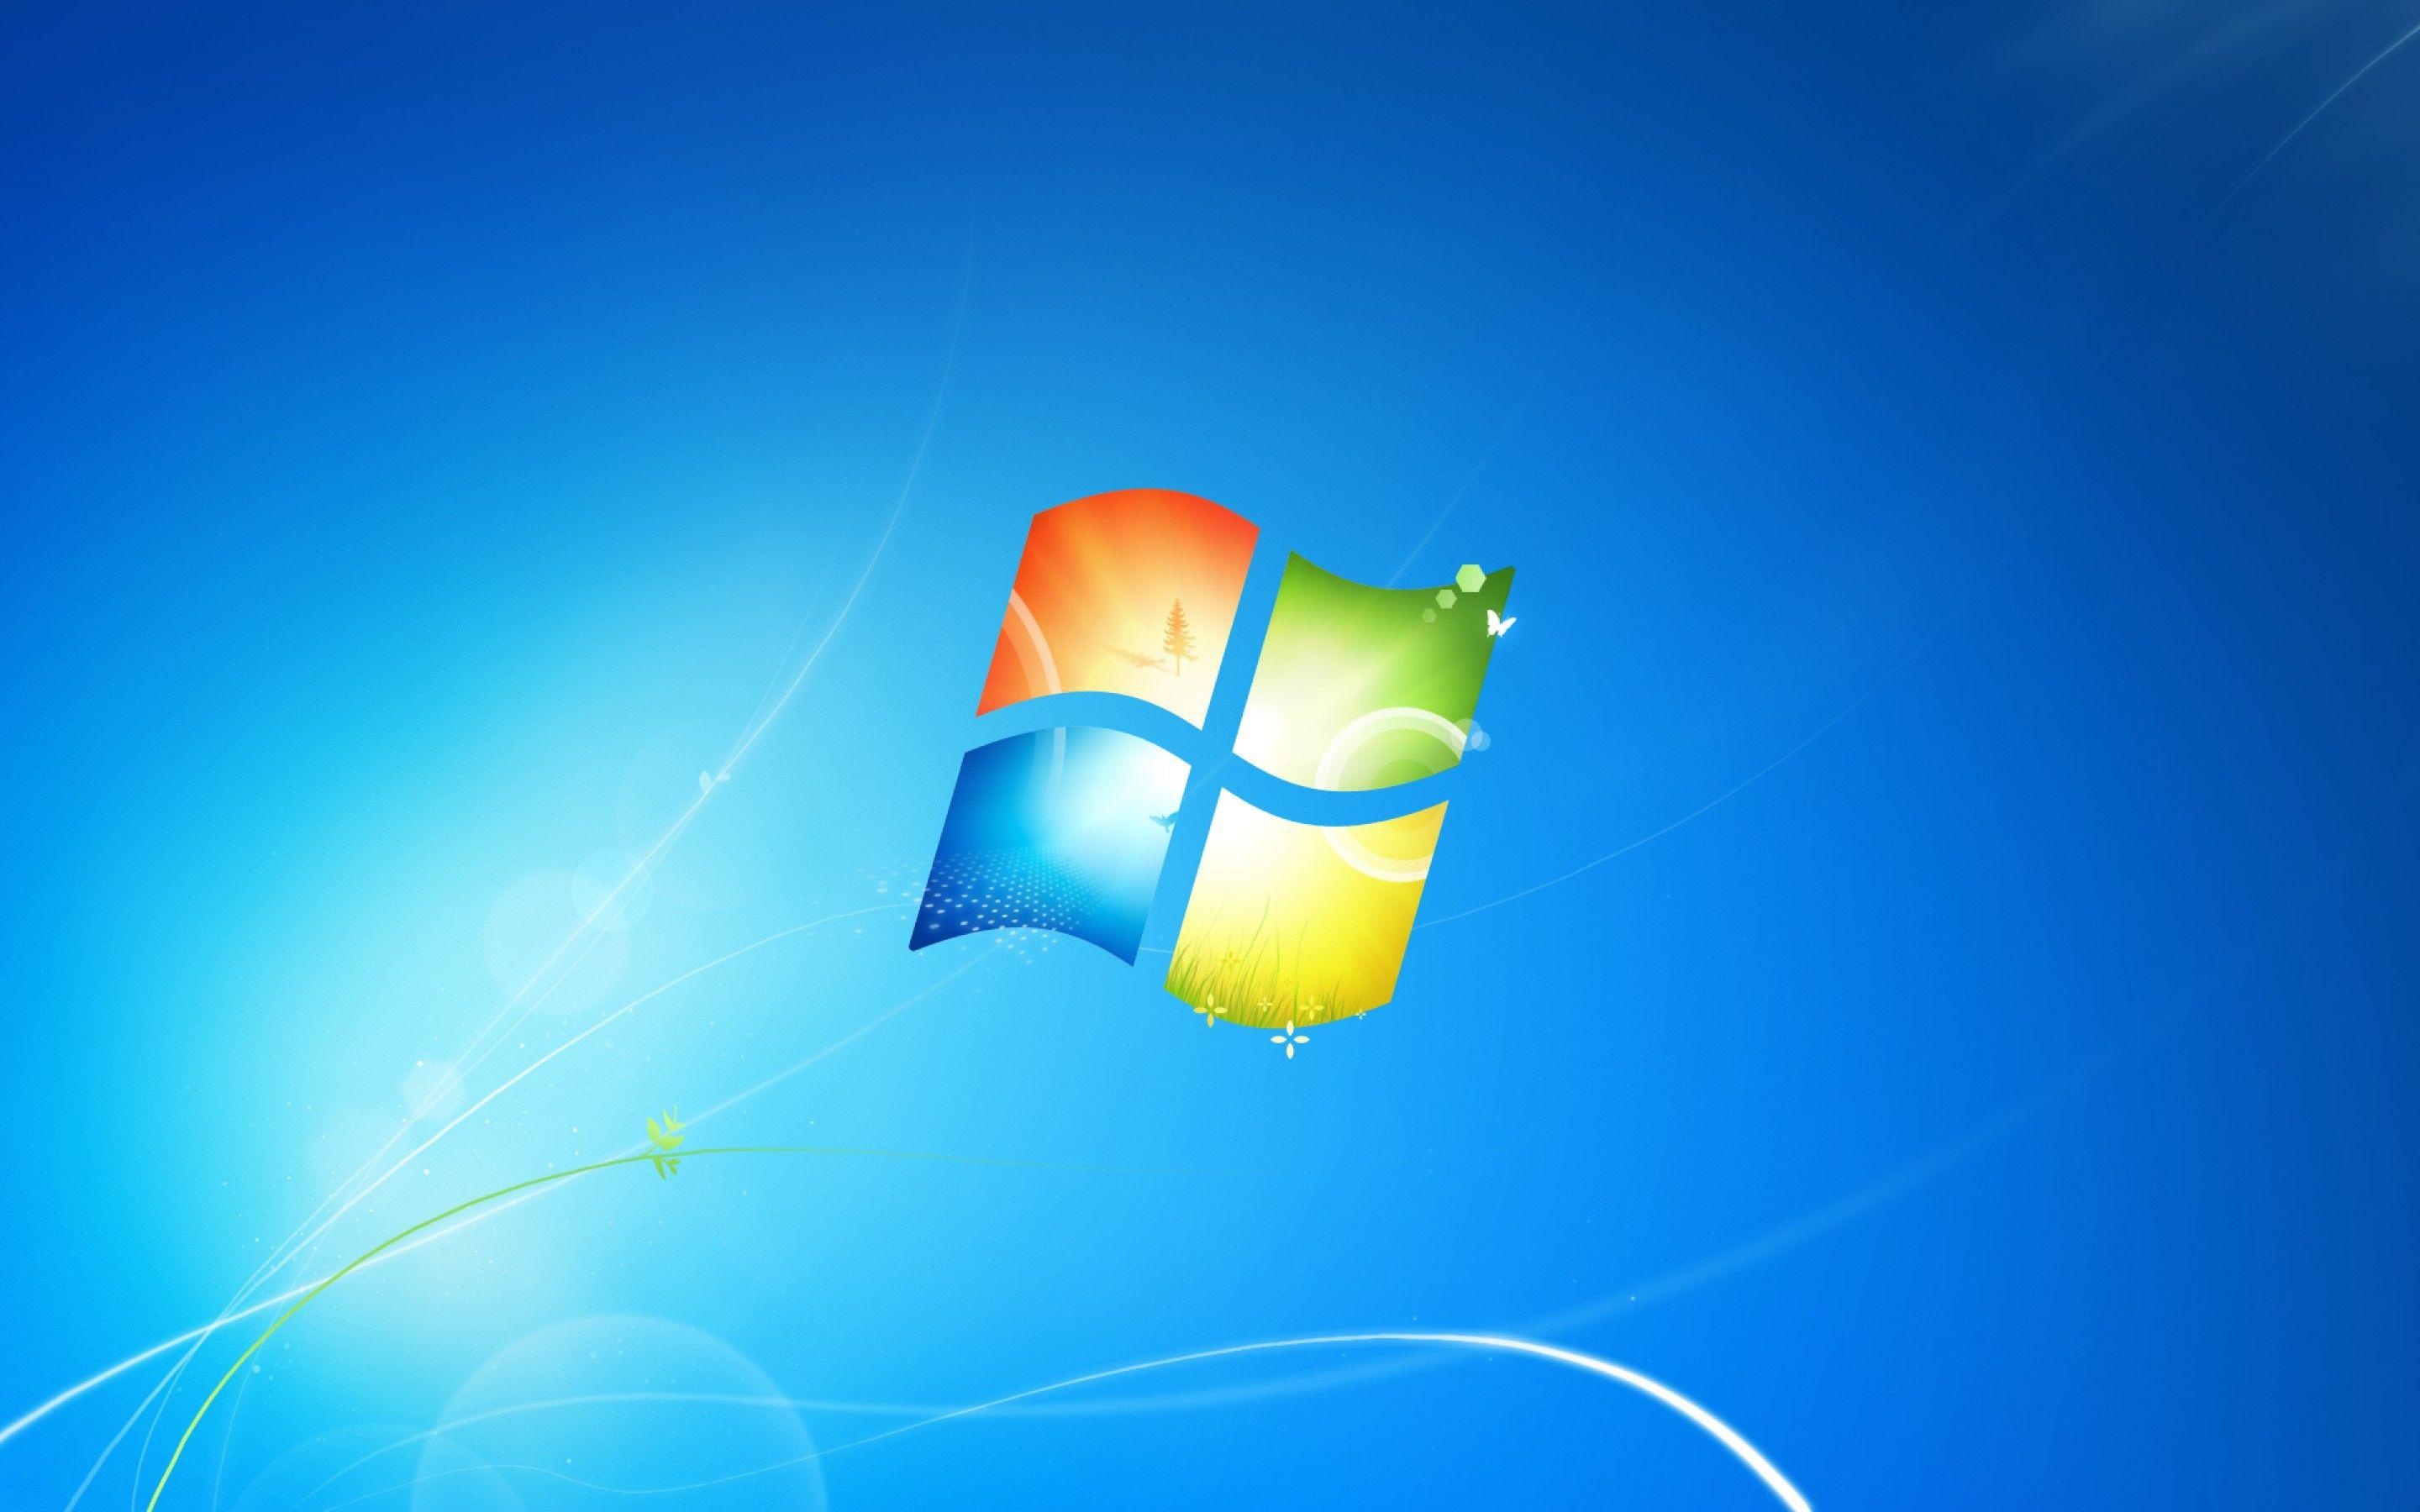 Microsoft Windows 7 Desktop Wallpaper. Smart House Ideas